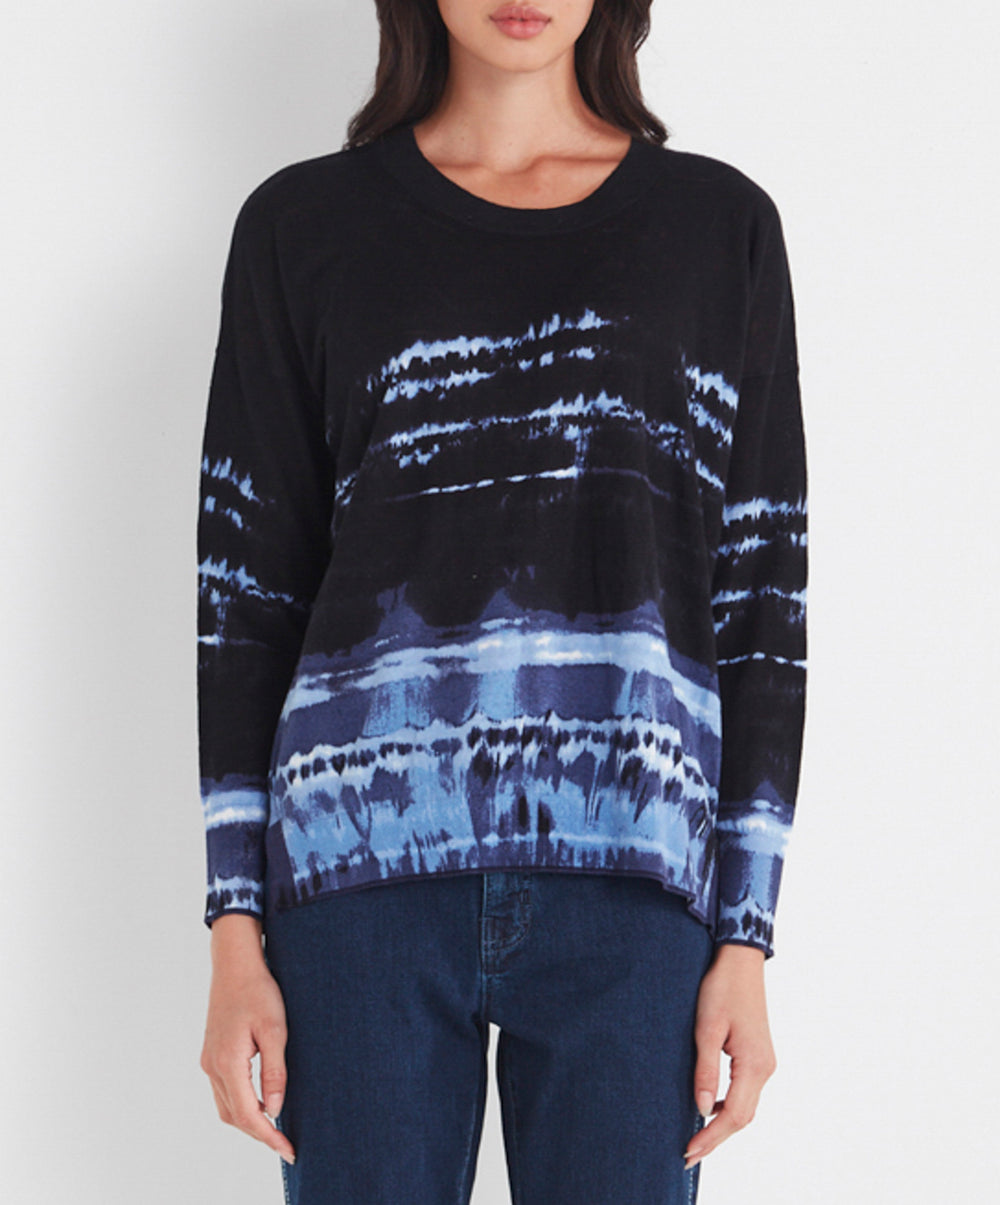 Visual Sweater